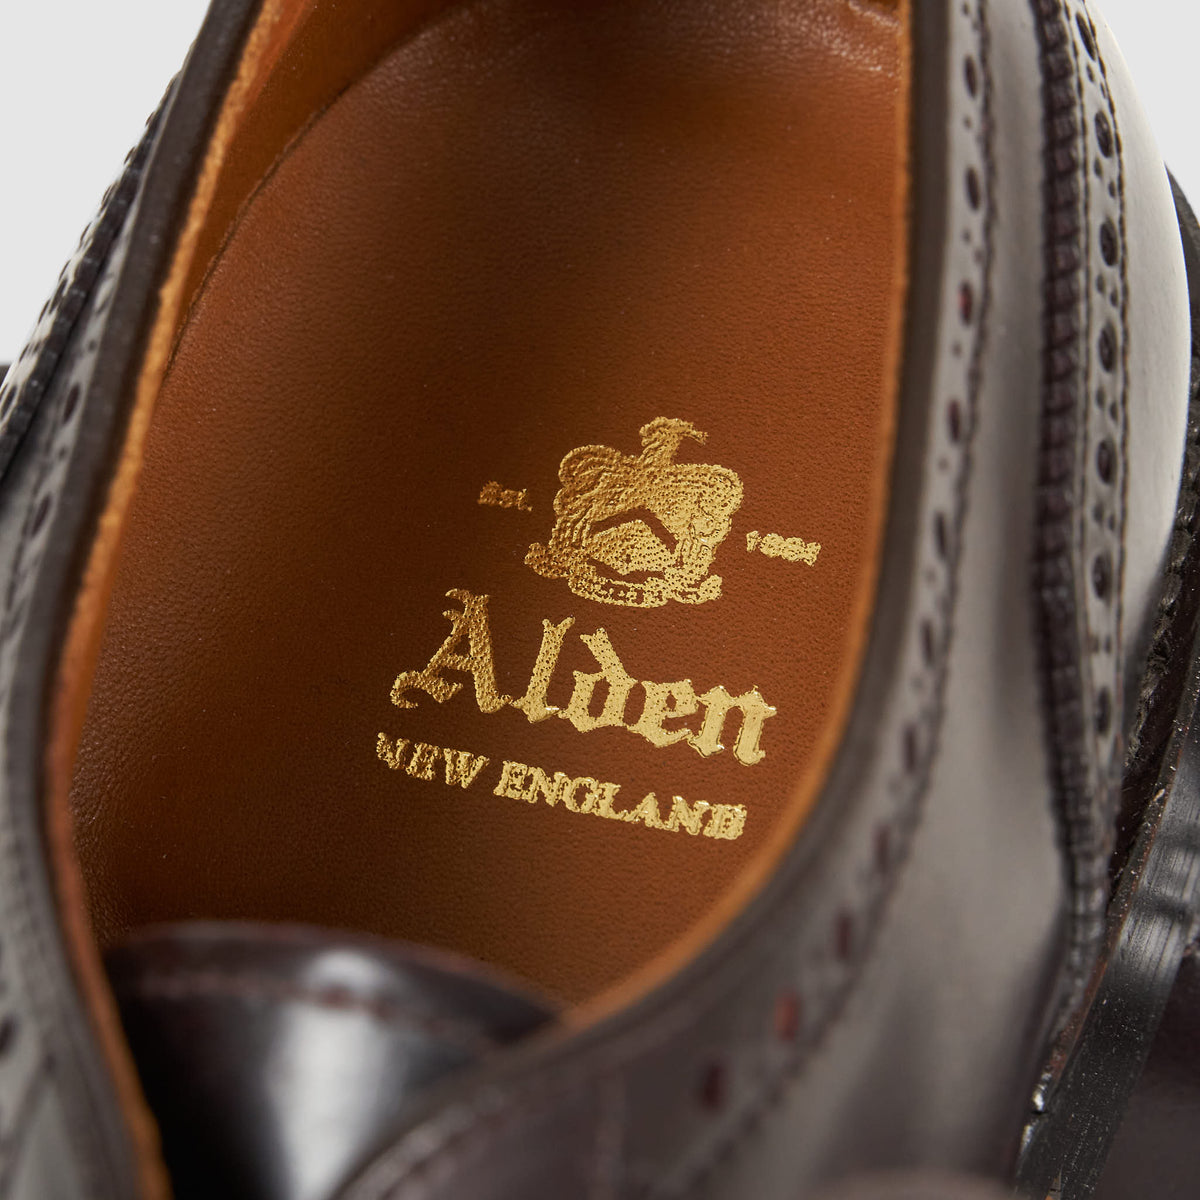 Alden Shoes Oxford Brogue 2145 Leather Shoes